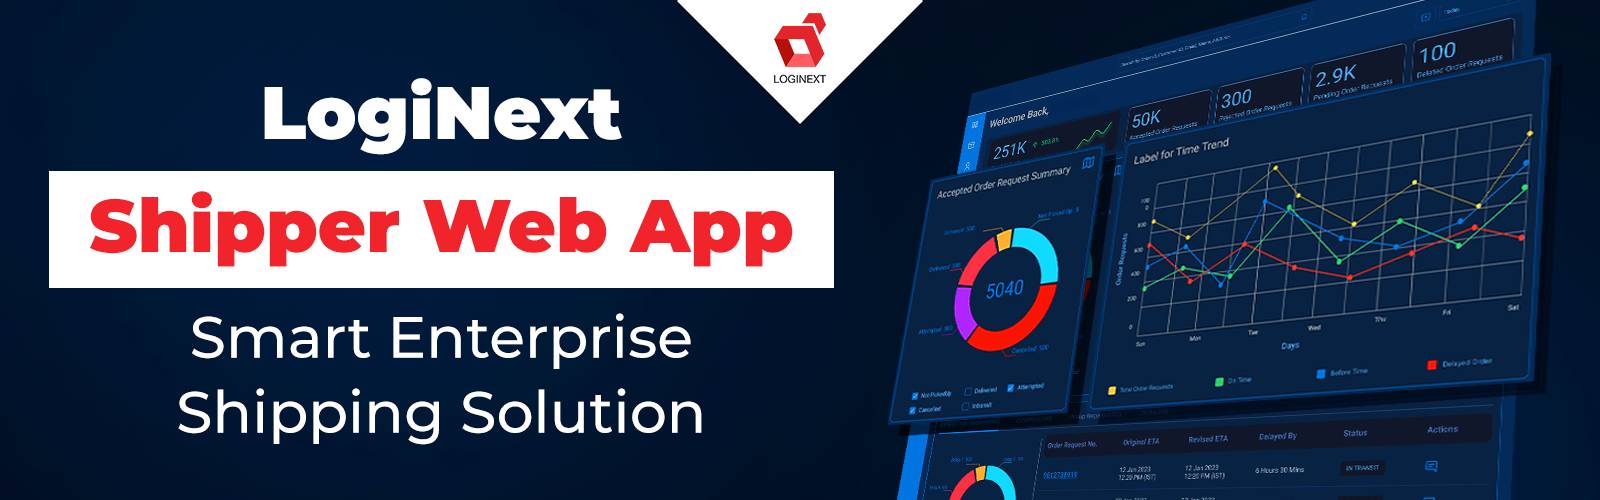 LogiNext Shipper Web App- Den bästa Shipper Web App